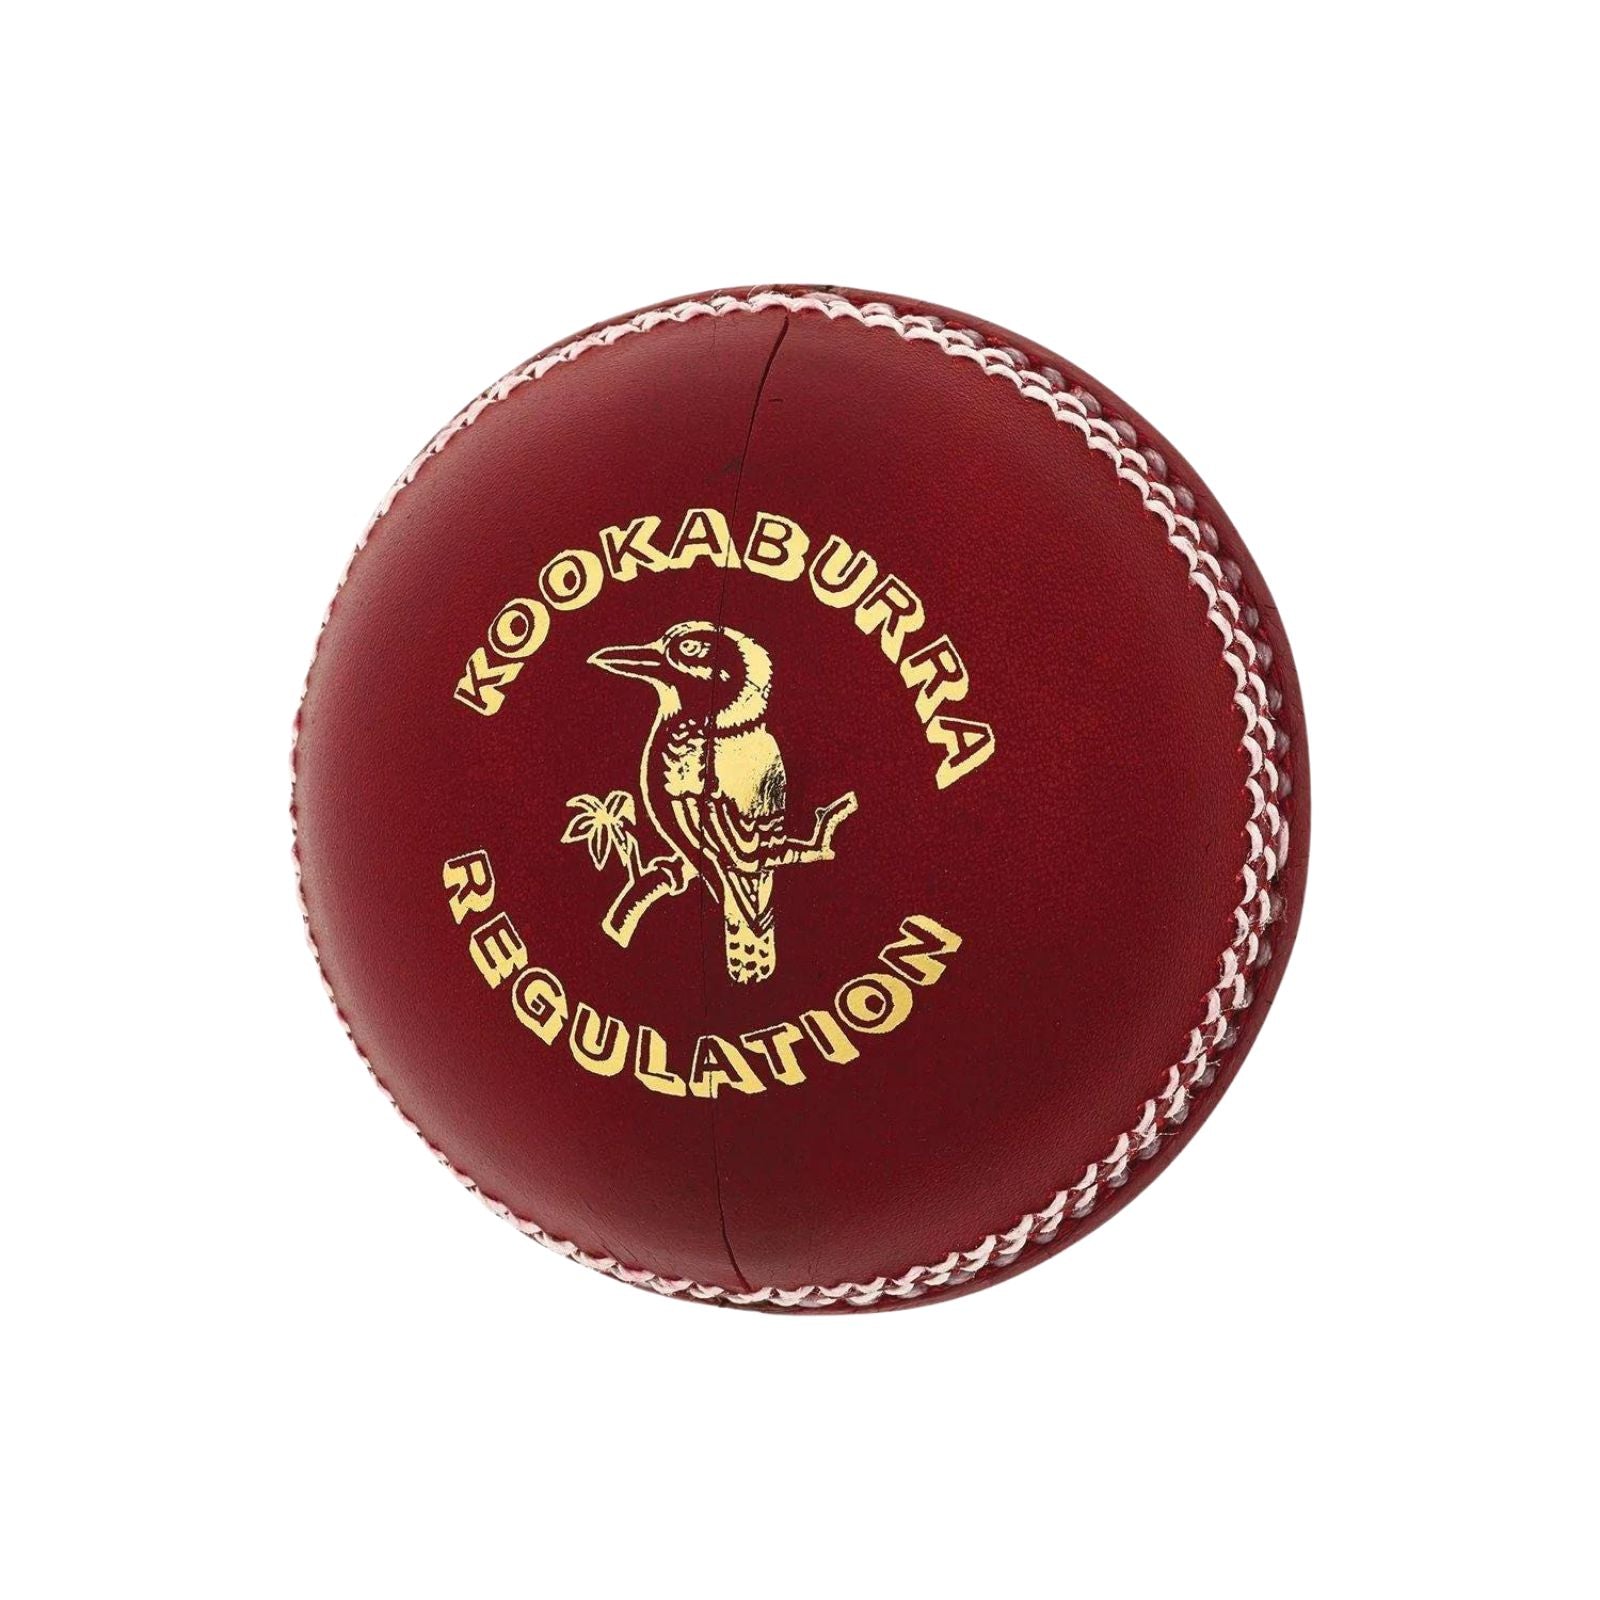 Kookaburra Regulation Red - 4 piece Ball (Senior)